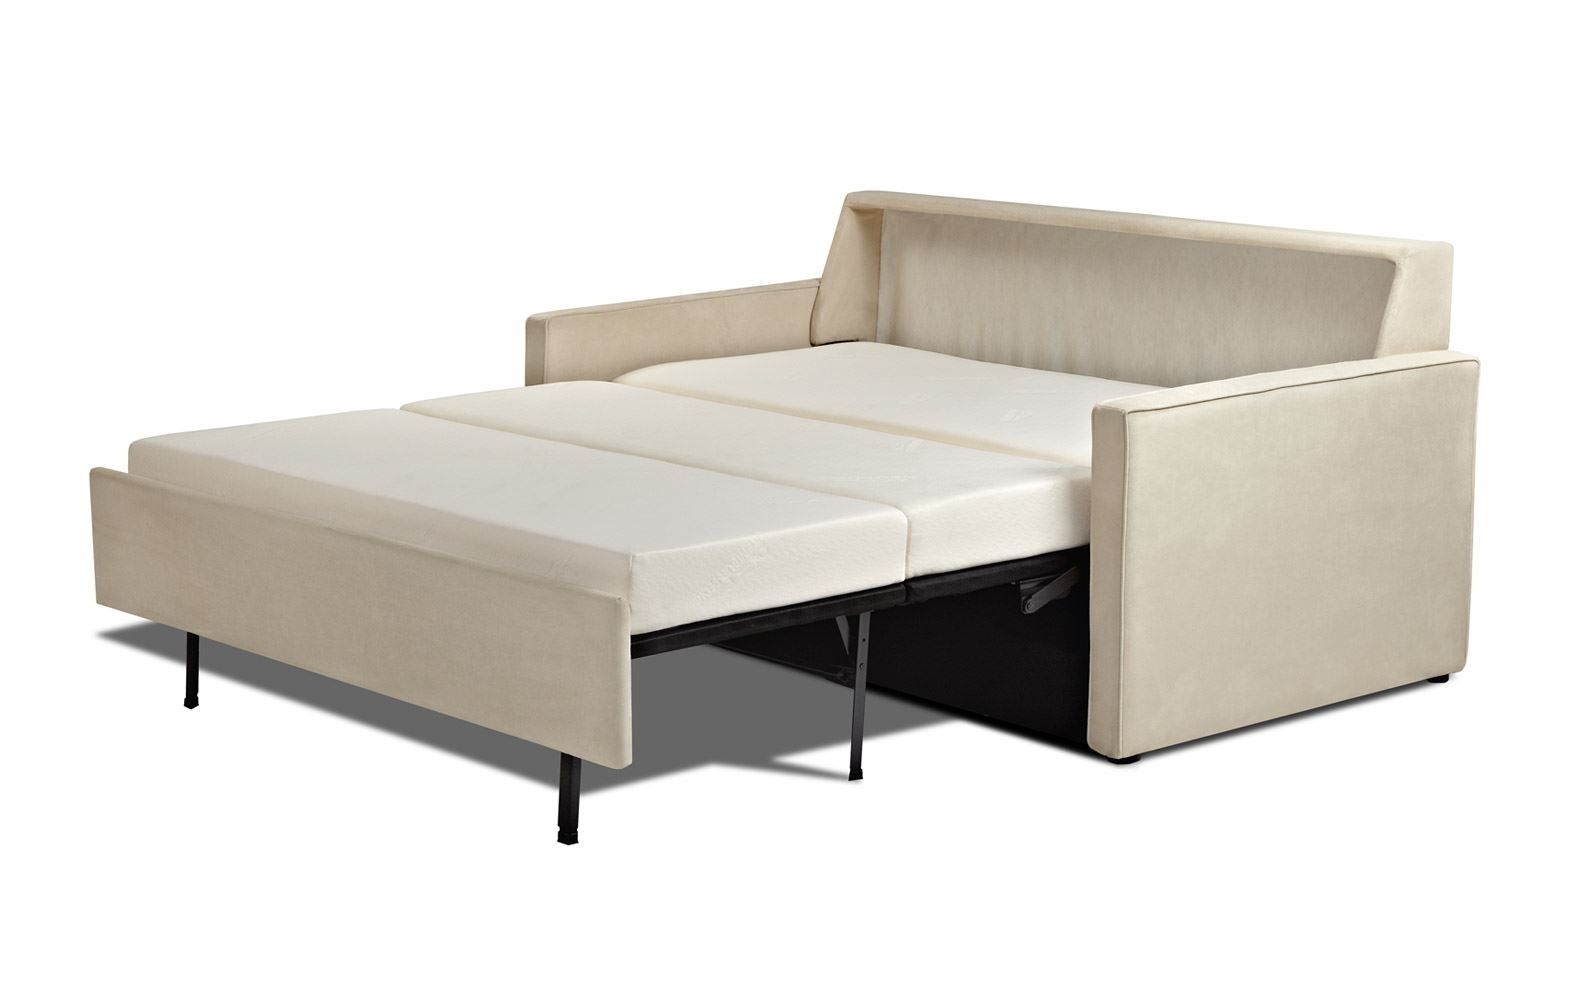 Tasty King Size Sleeper Sofa Bedroom Ideas Regarding Designs 8 Pertaining To King Size Sleeper Sofas 